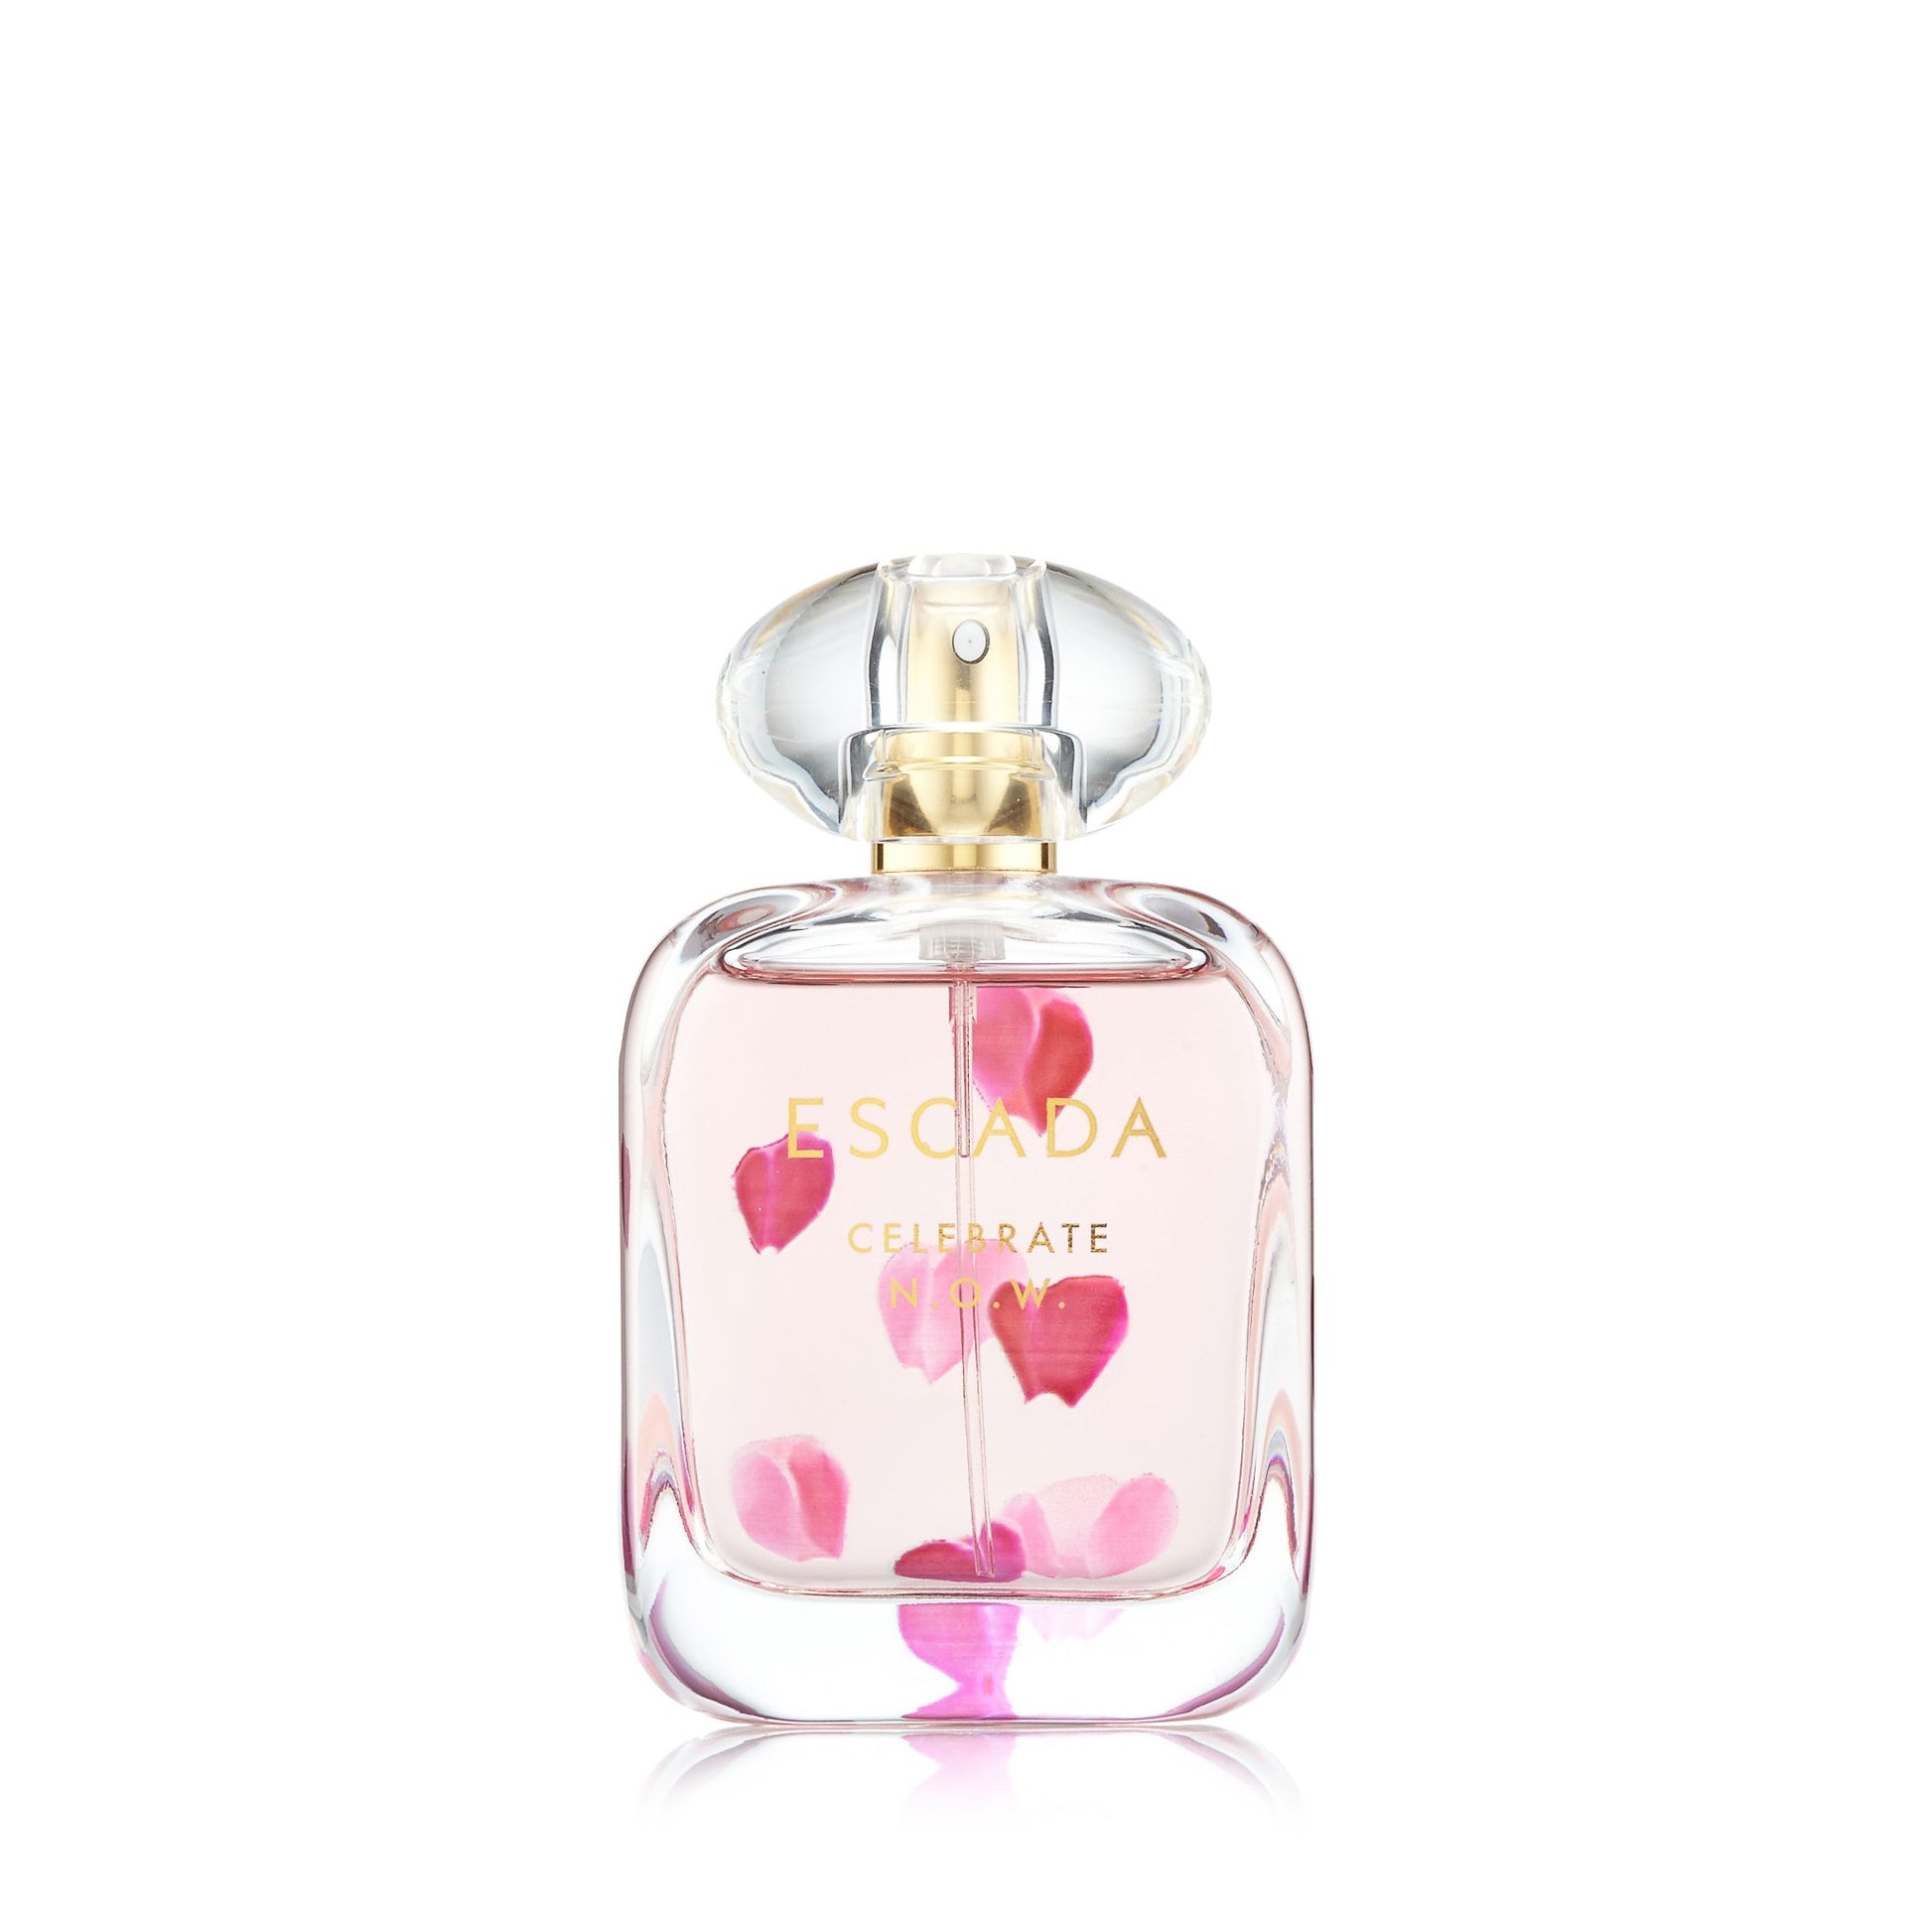 Celebrate Now Eau de Parfum Spray for Women by Escada, Product image 1